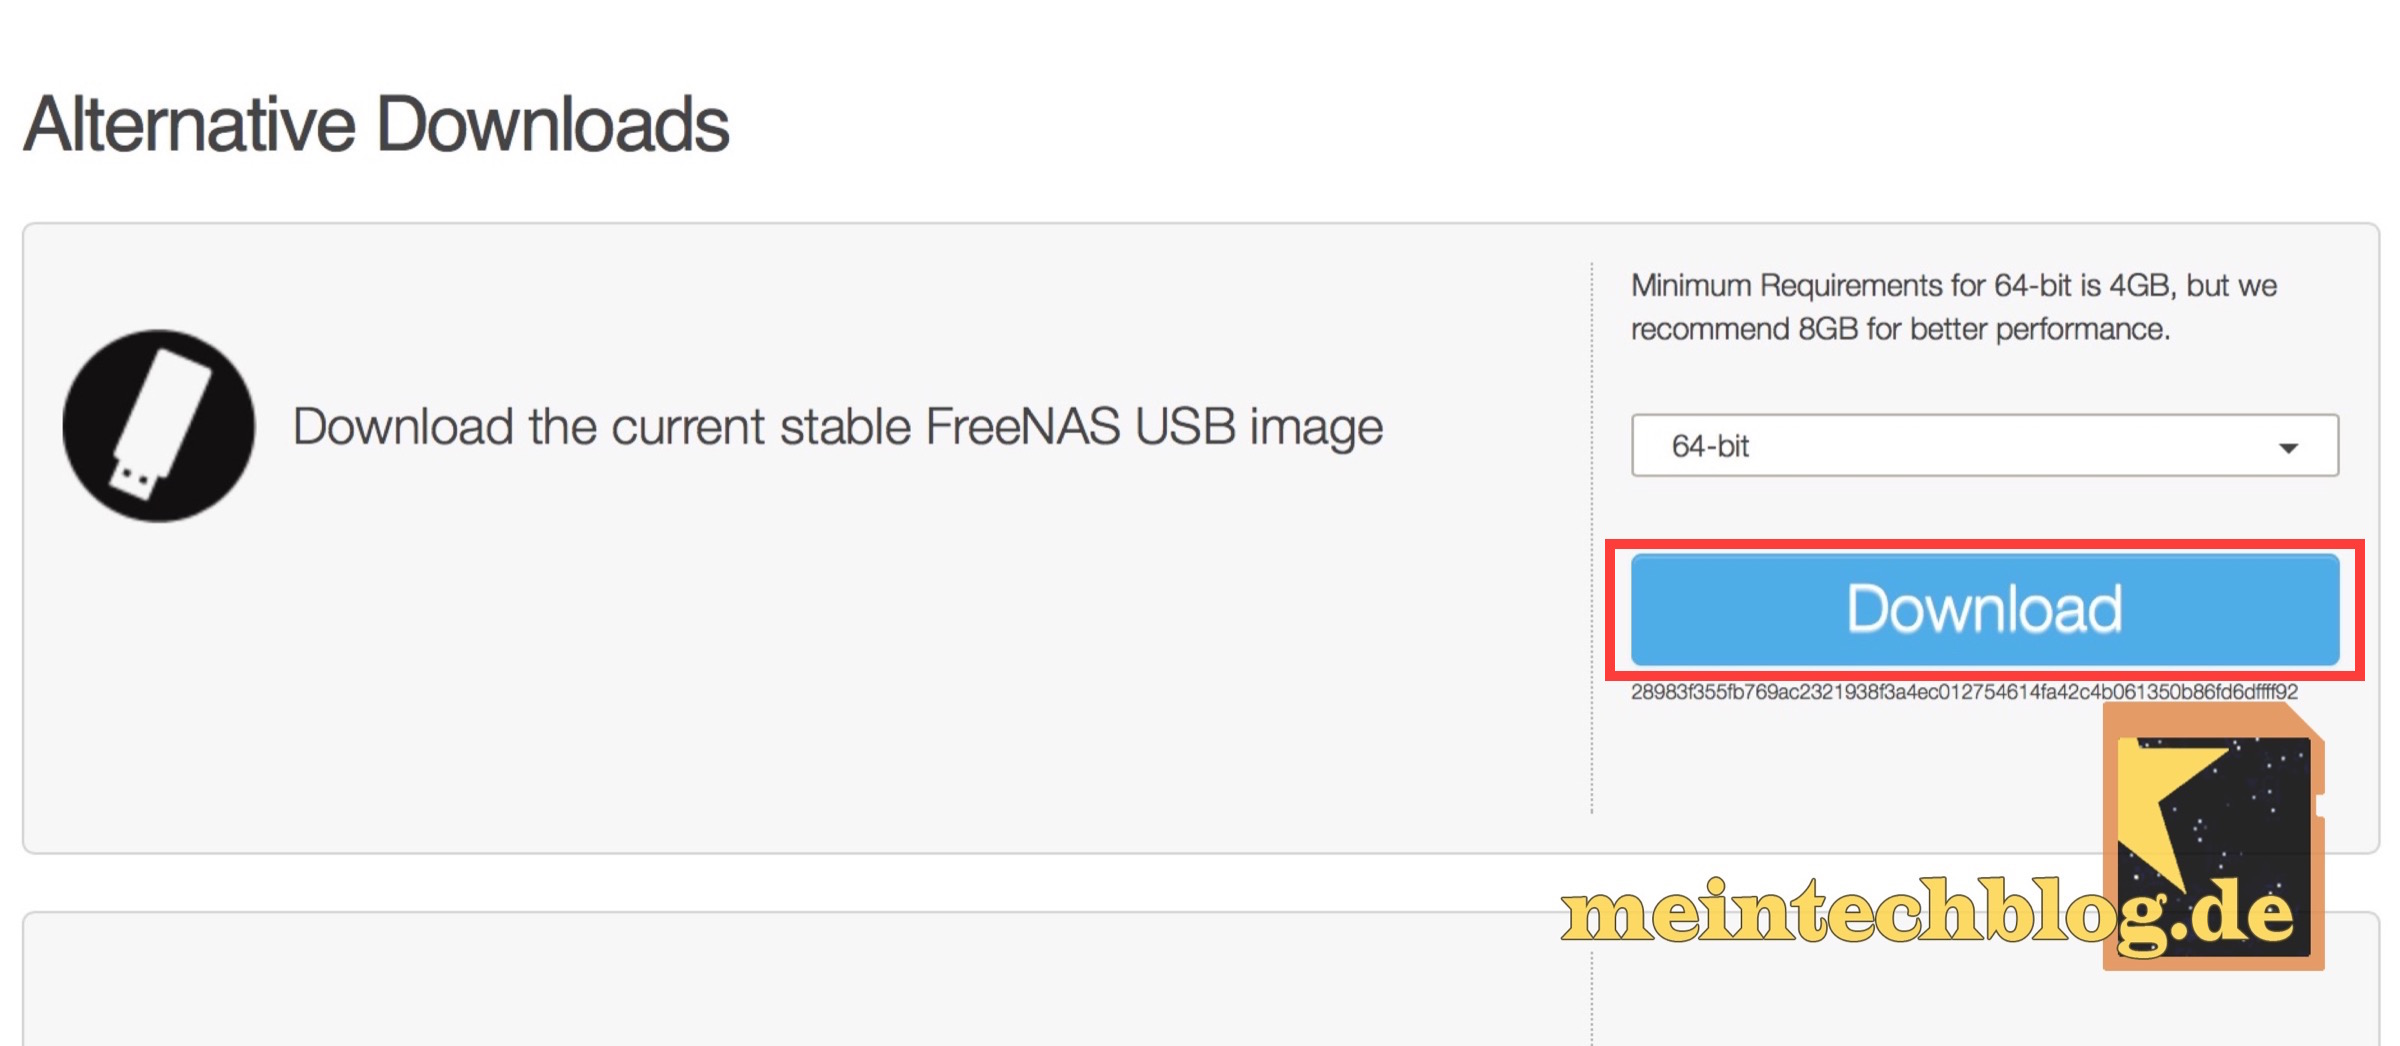 FreeNAS Alternative Downloads USB image 64-bit